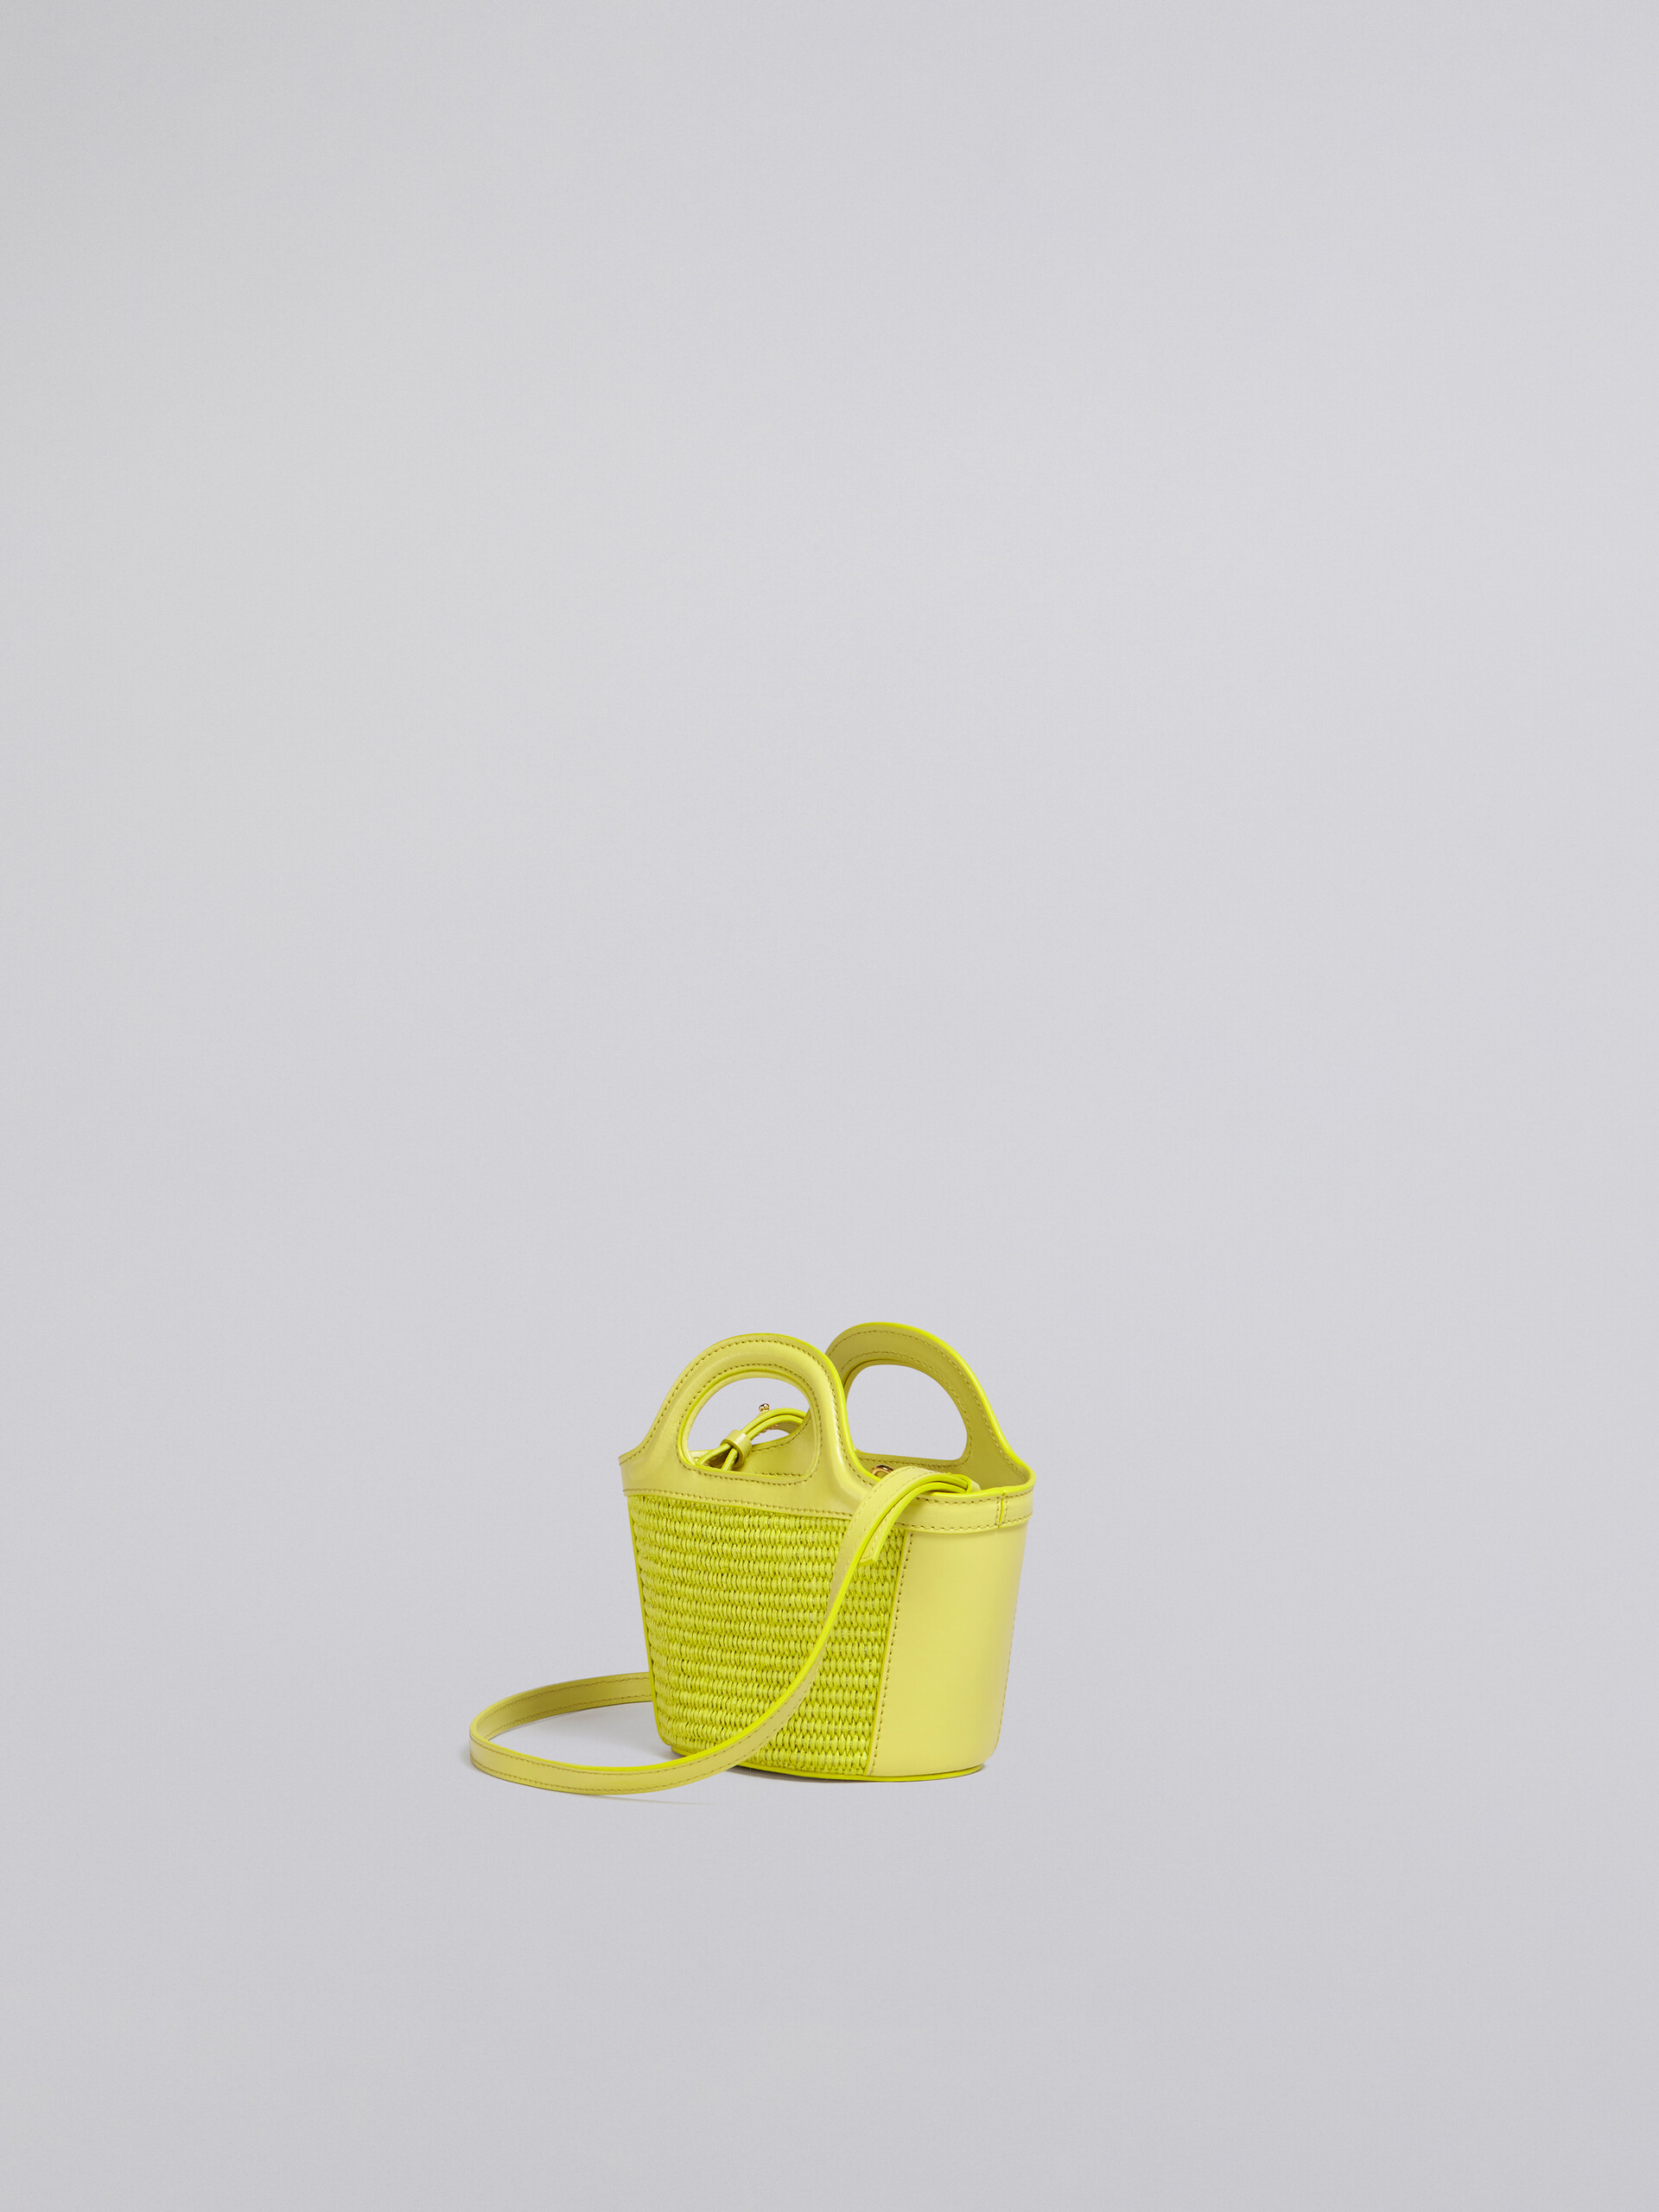 TROPICALIA micro bag in yellow leather and raffia - Handbag - Image 3